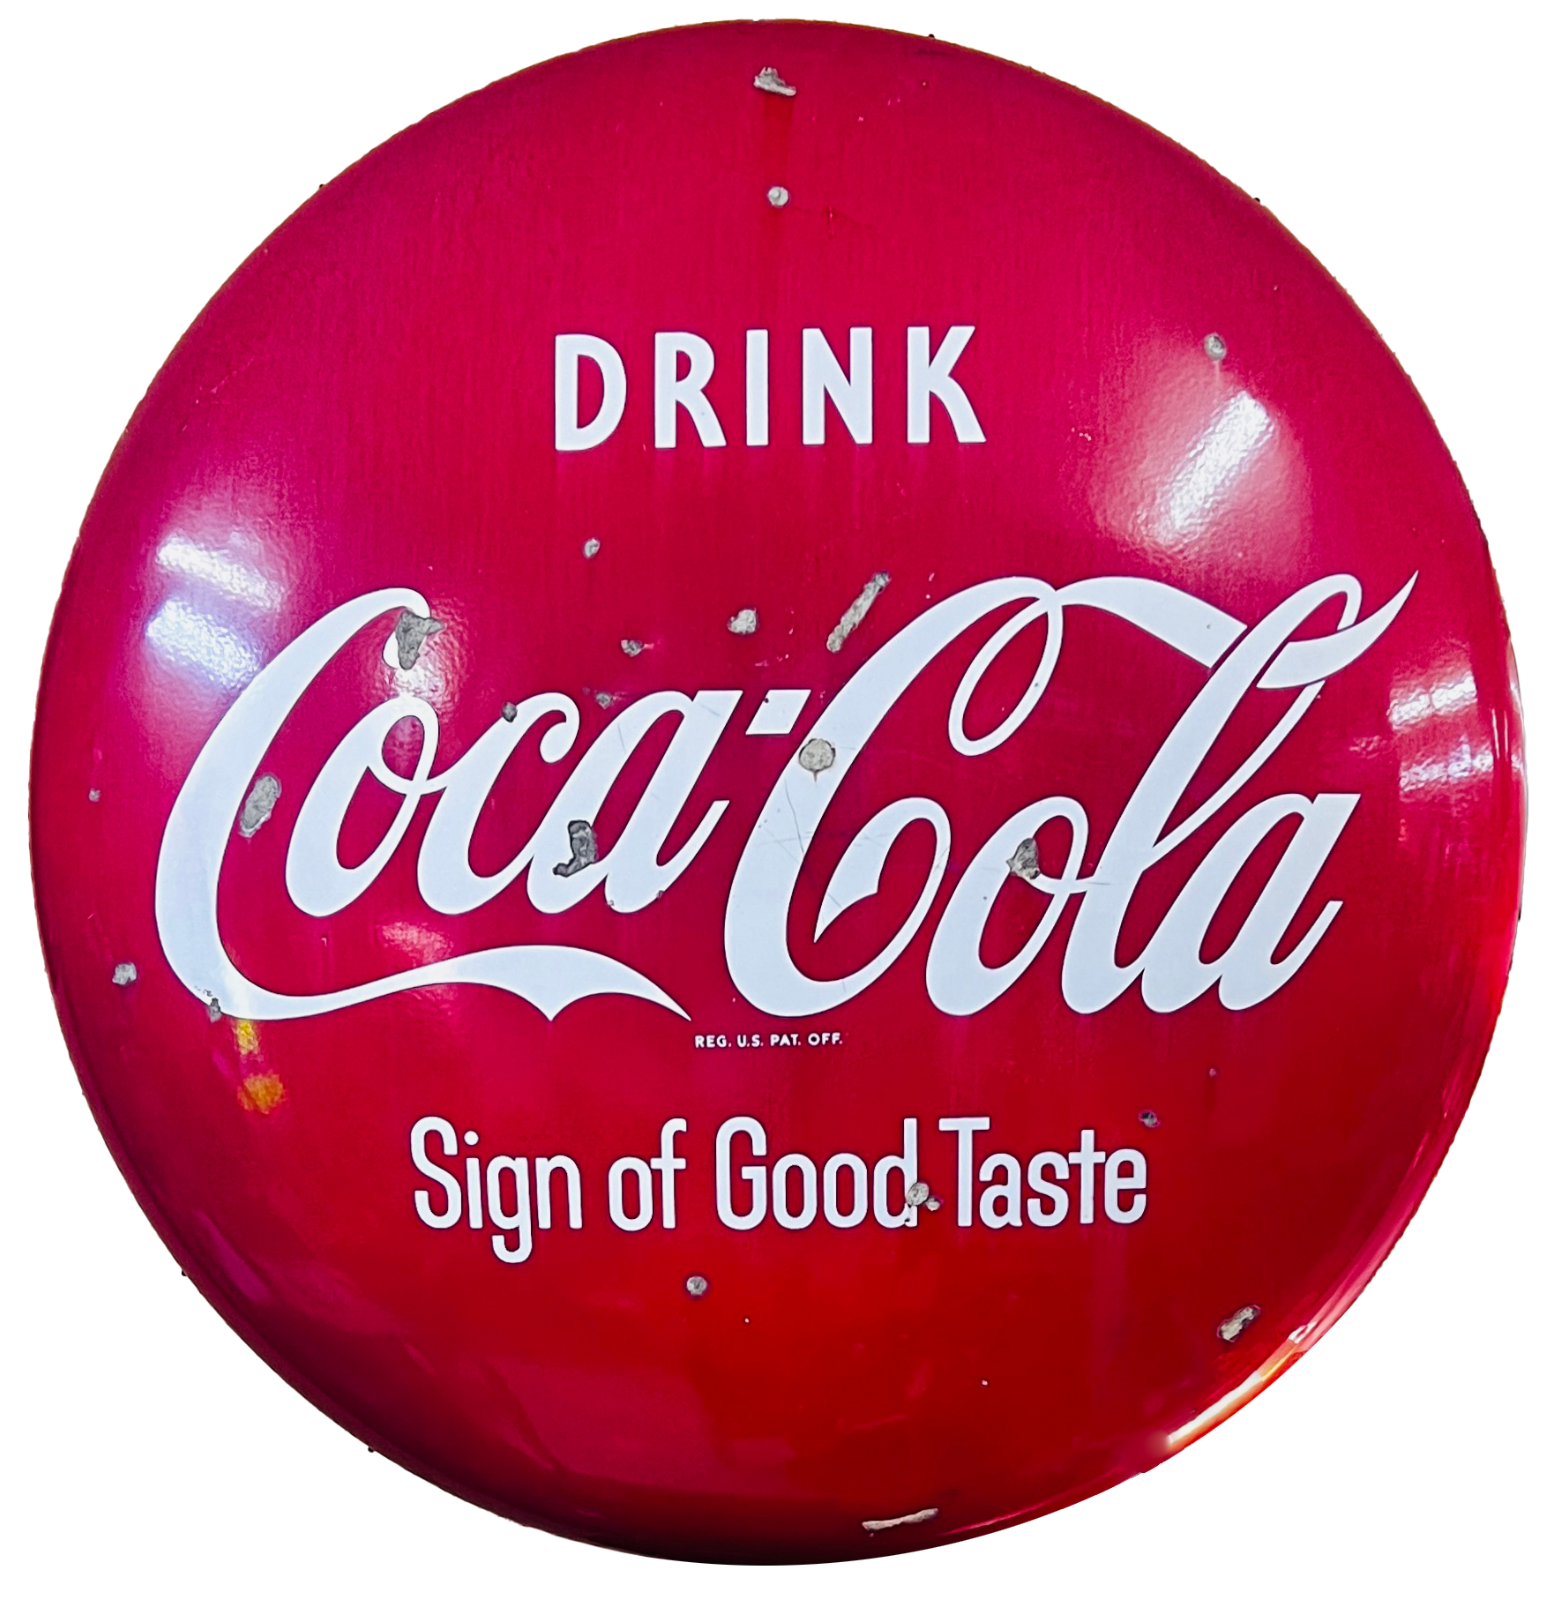 Primary image for 1950's Vintage Porcelain Drink COCA COLA Button Sign 48-in "Sign of Good Taste"